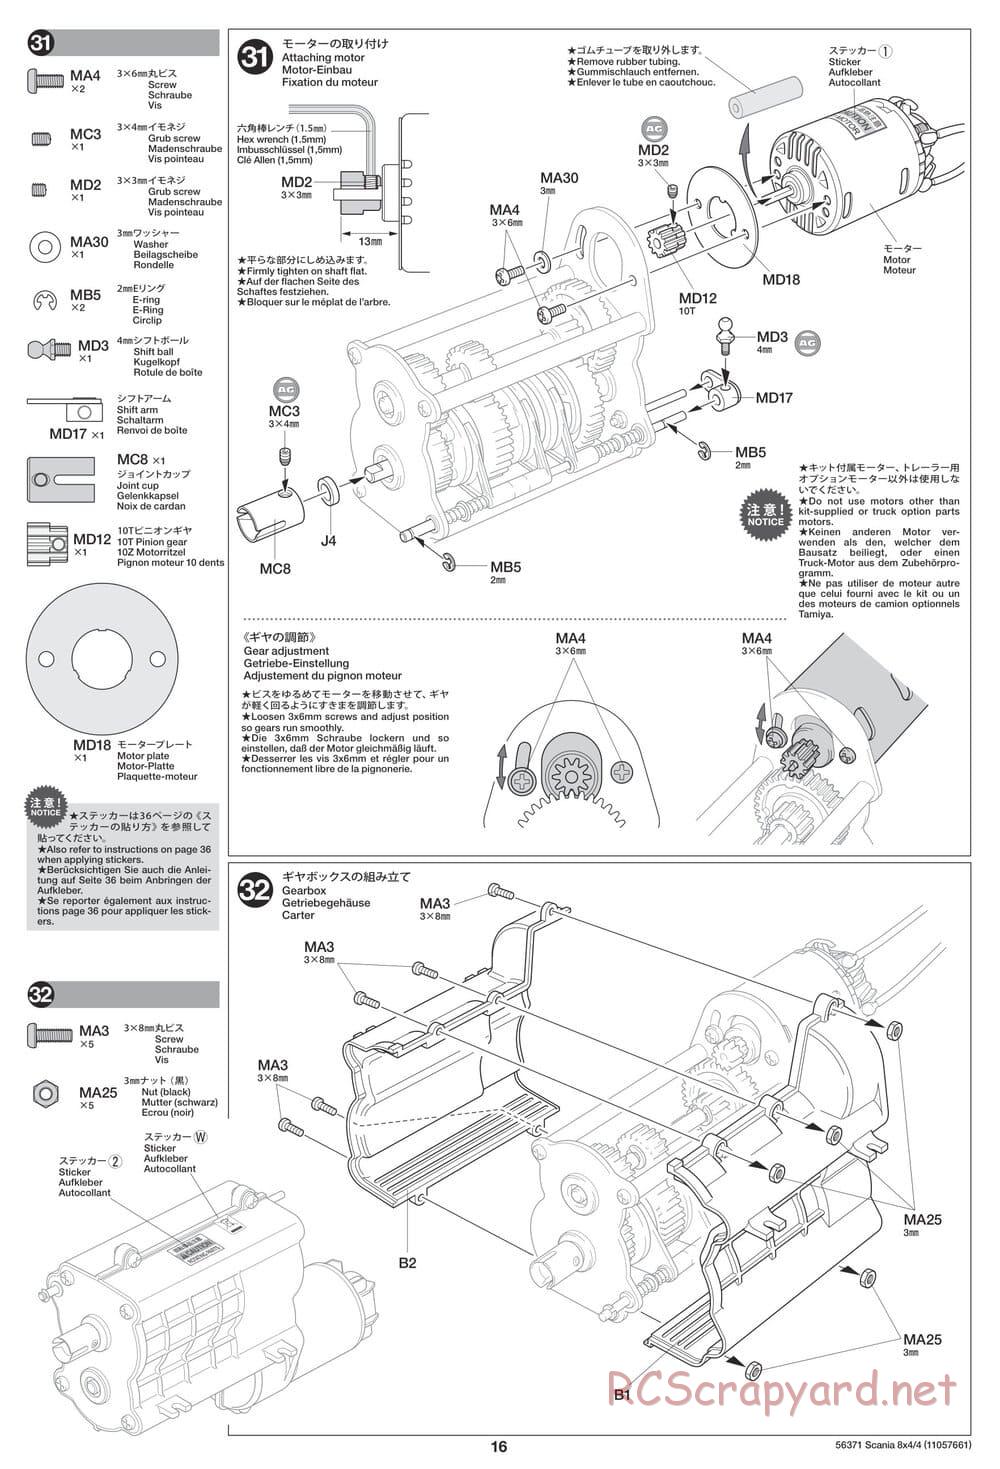 Tamiya - Scania 770 S 8x4/4 Chassis - Manual - Page 16